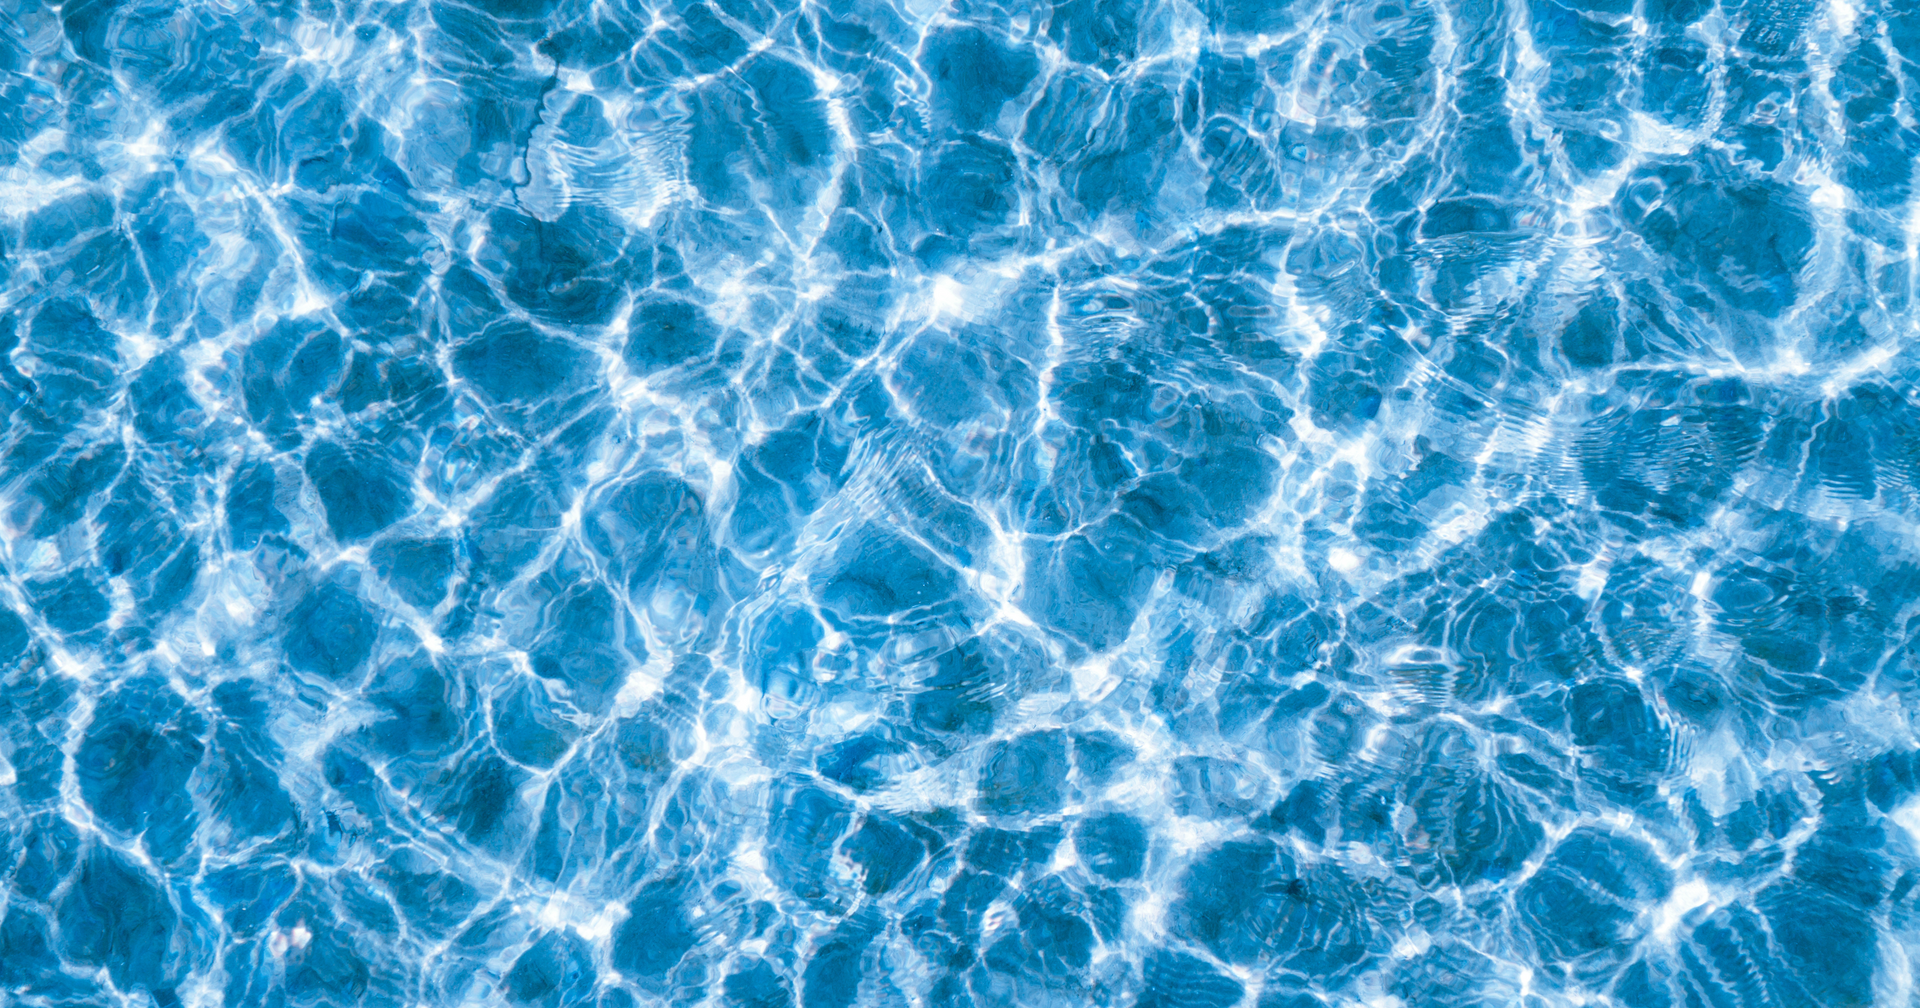 Splash into Summer Fun with Weekly Pool TLC